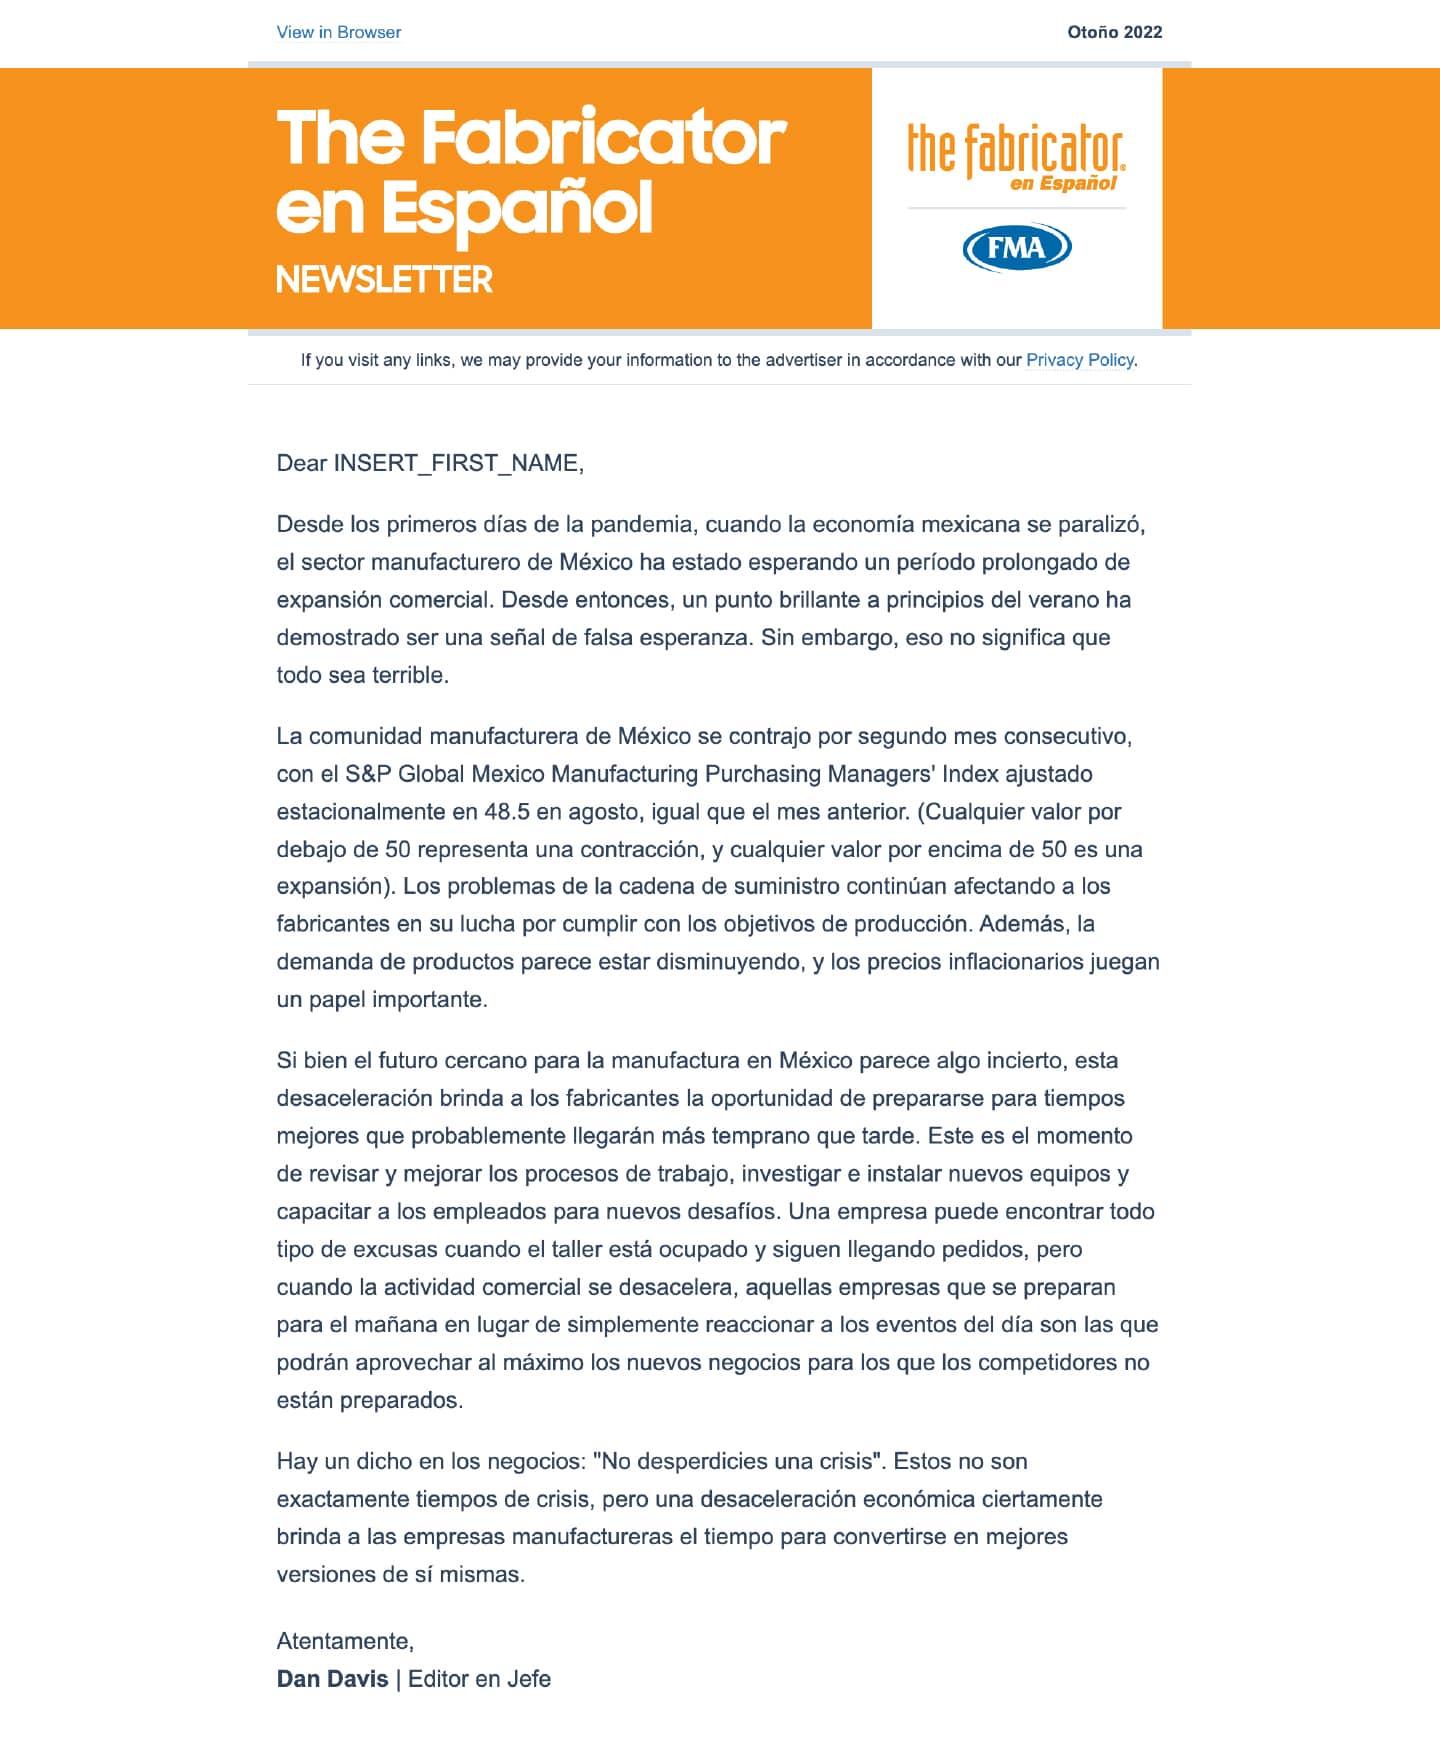 A mockup of The FABRICATOR en Espanol newsletter